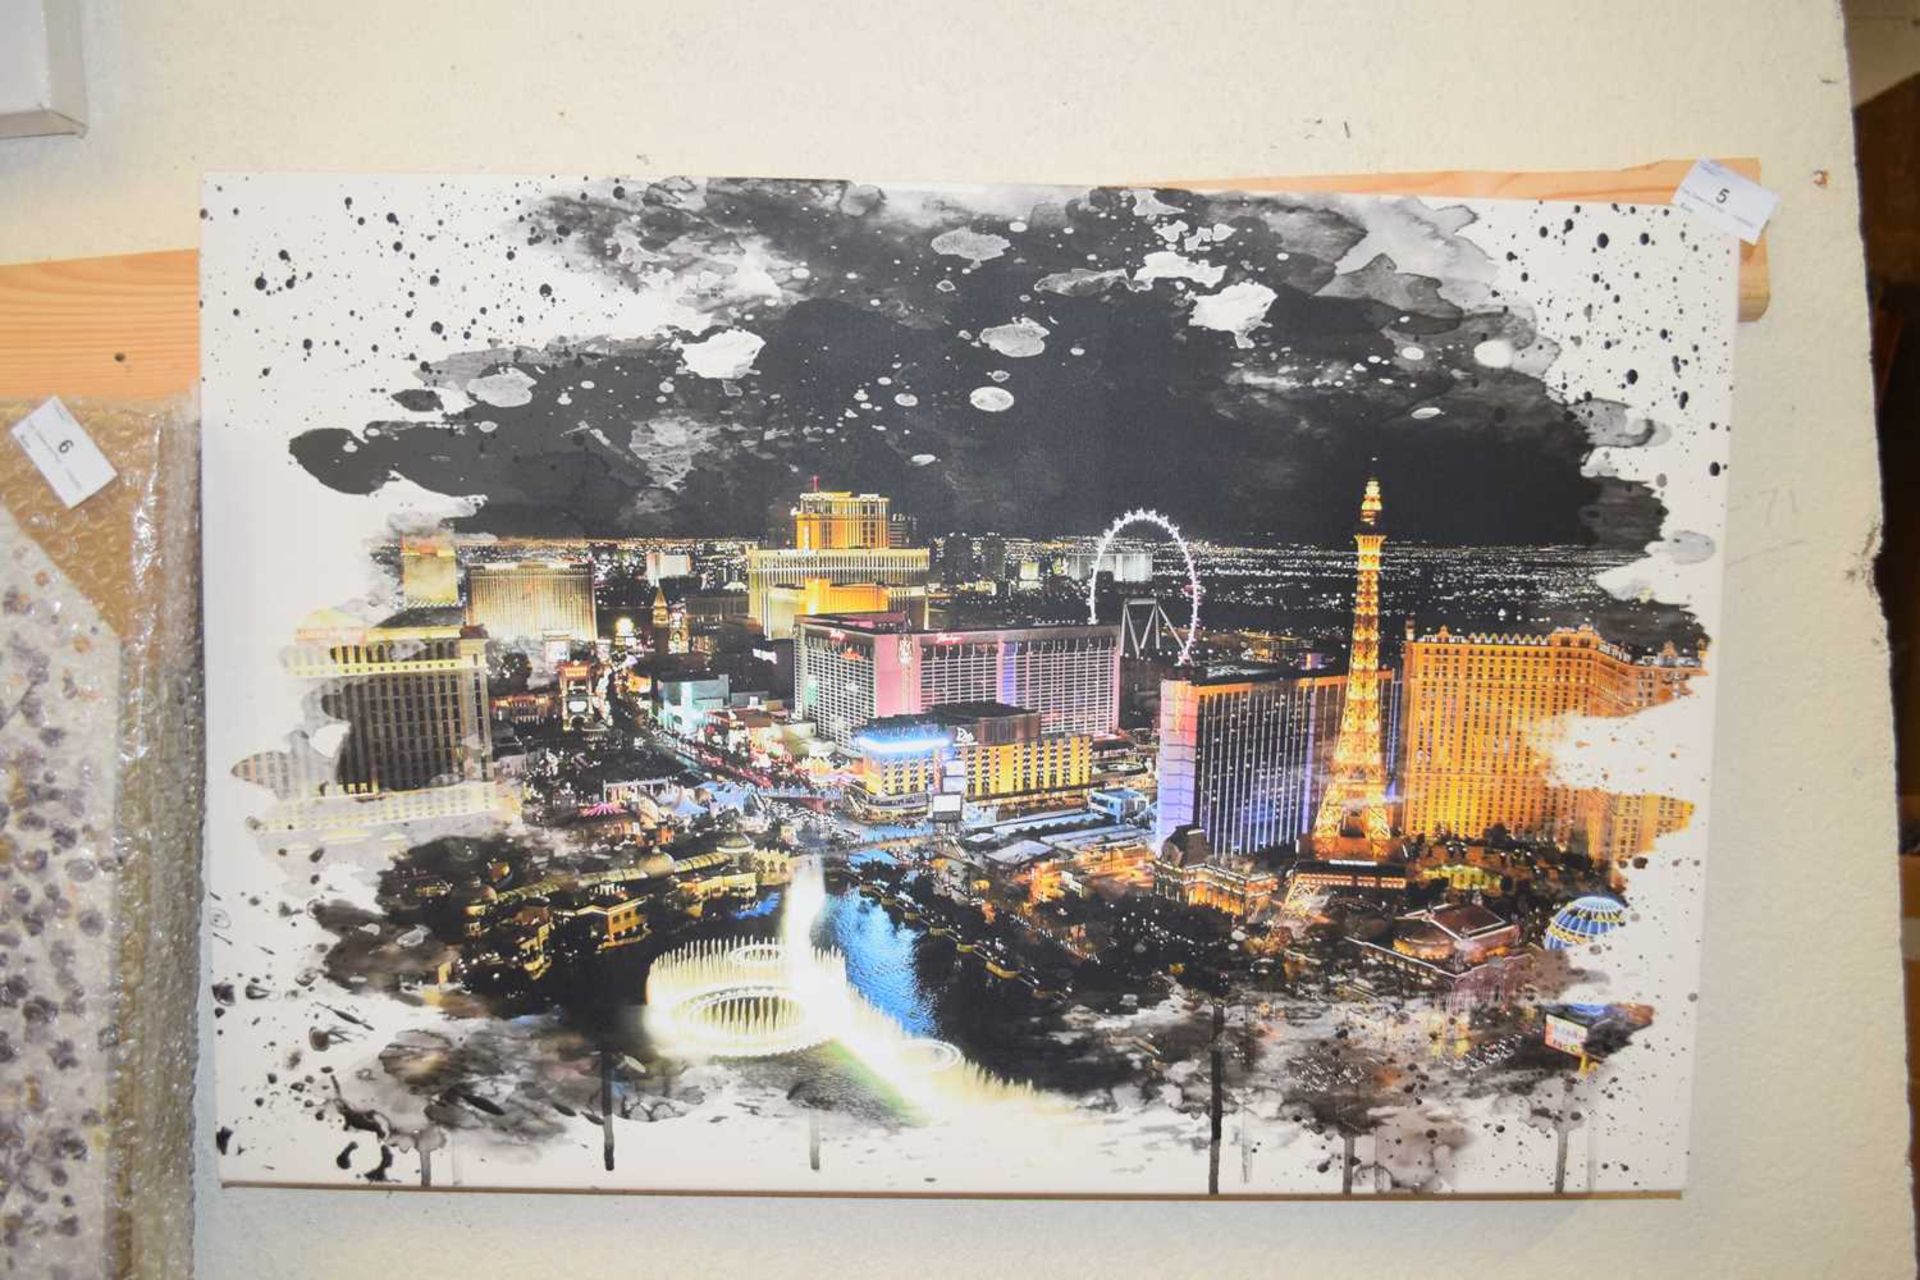 Las Vegas photographic print on canvas, 60 x 40cm